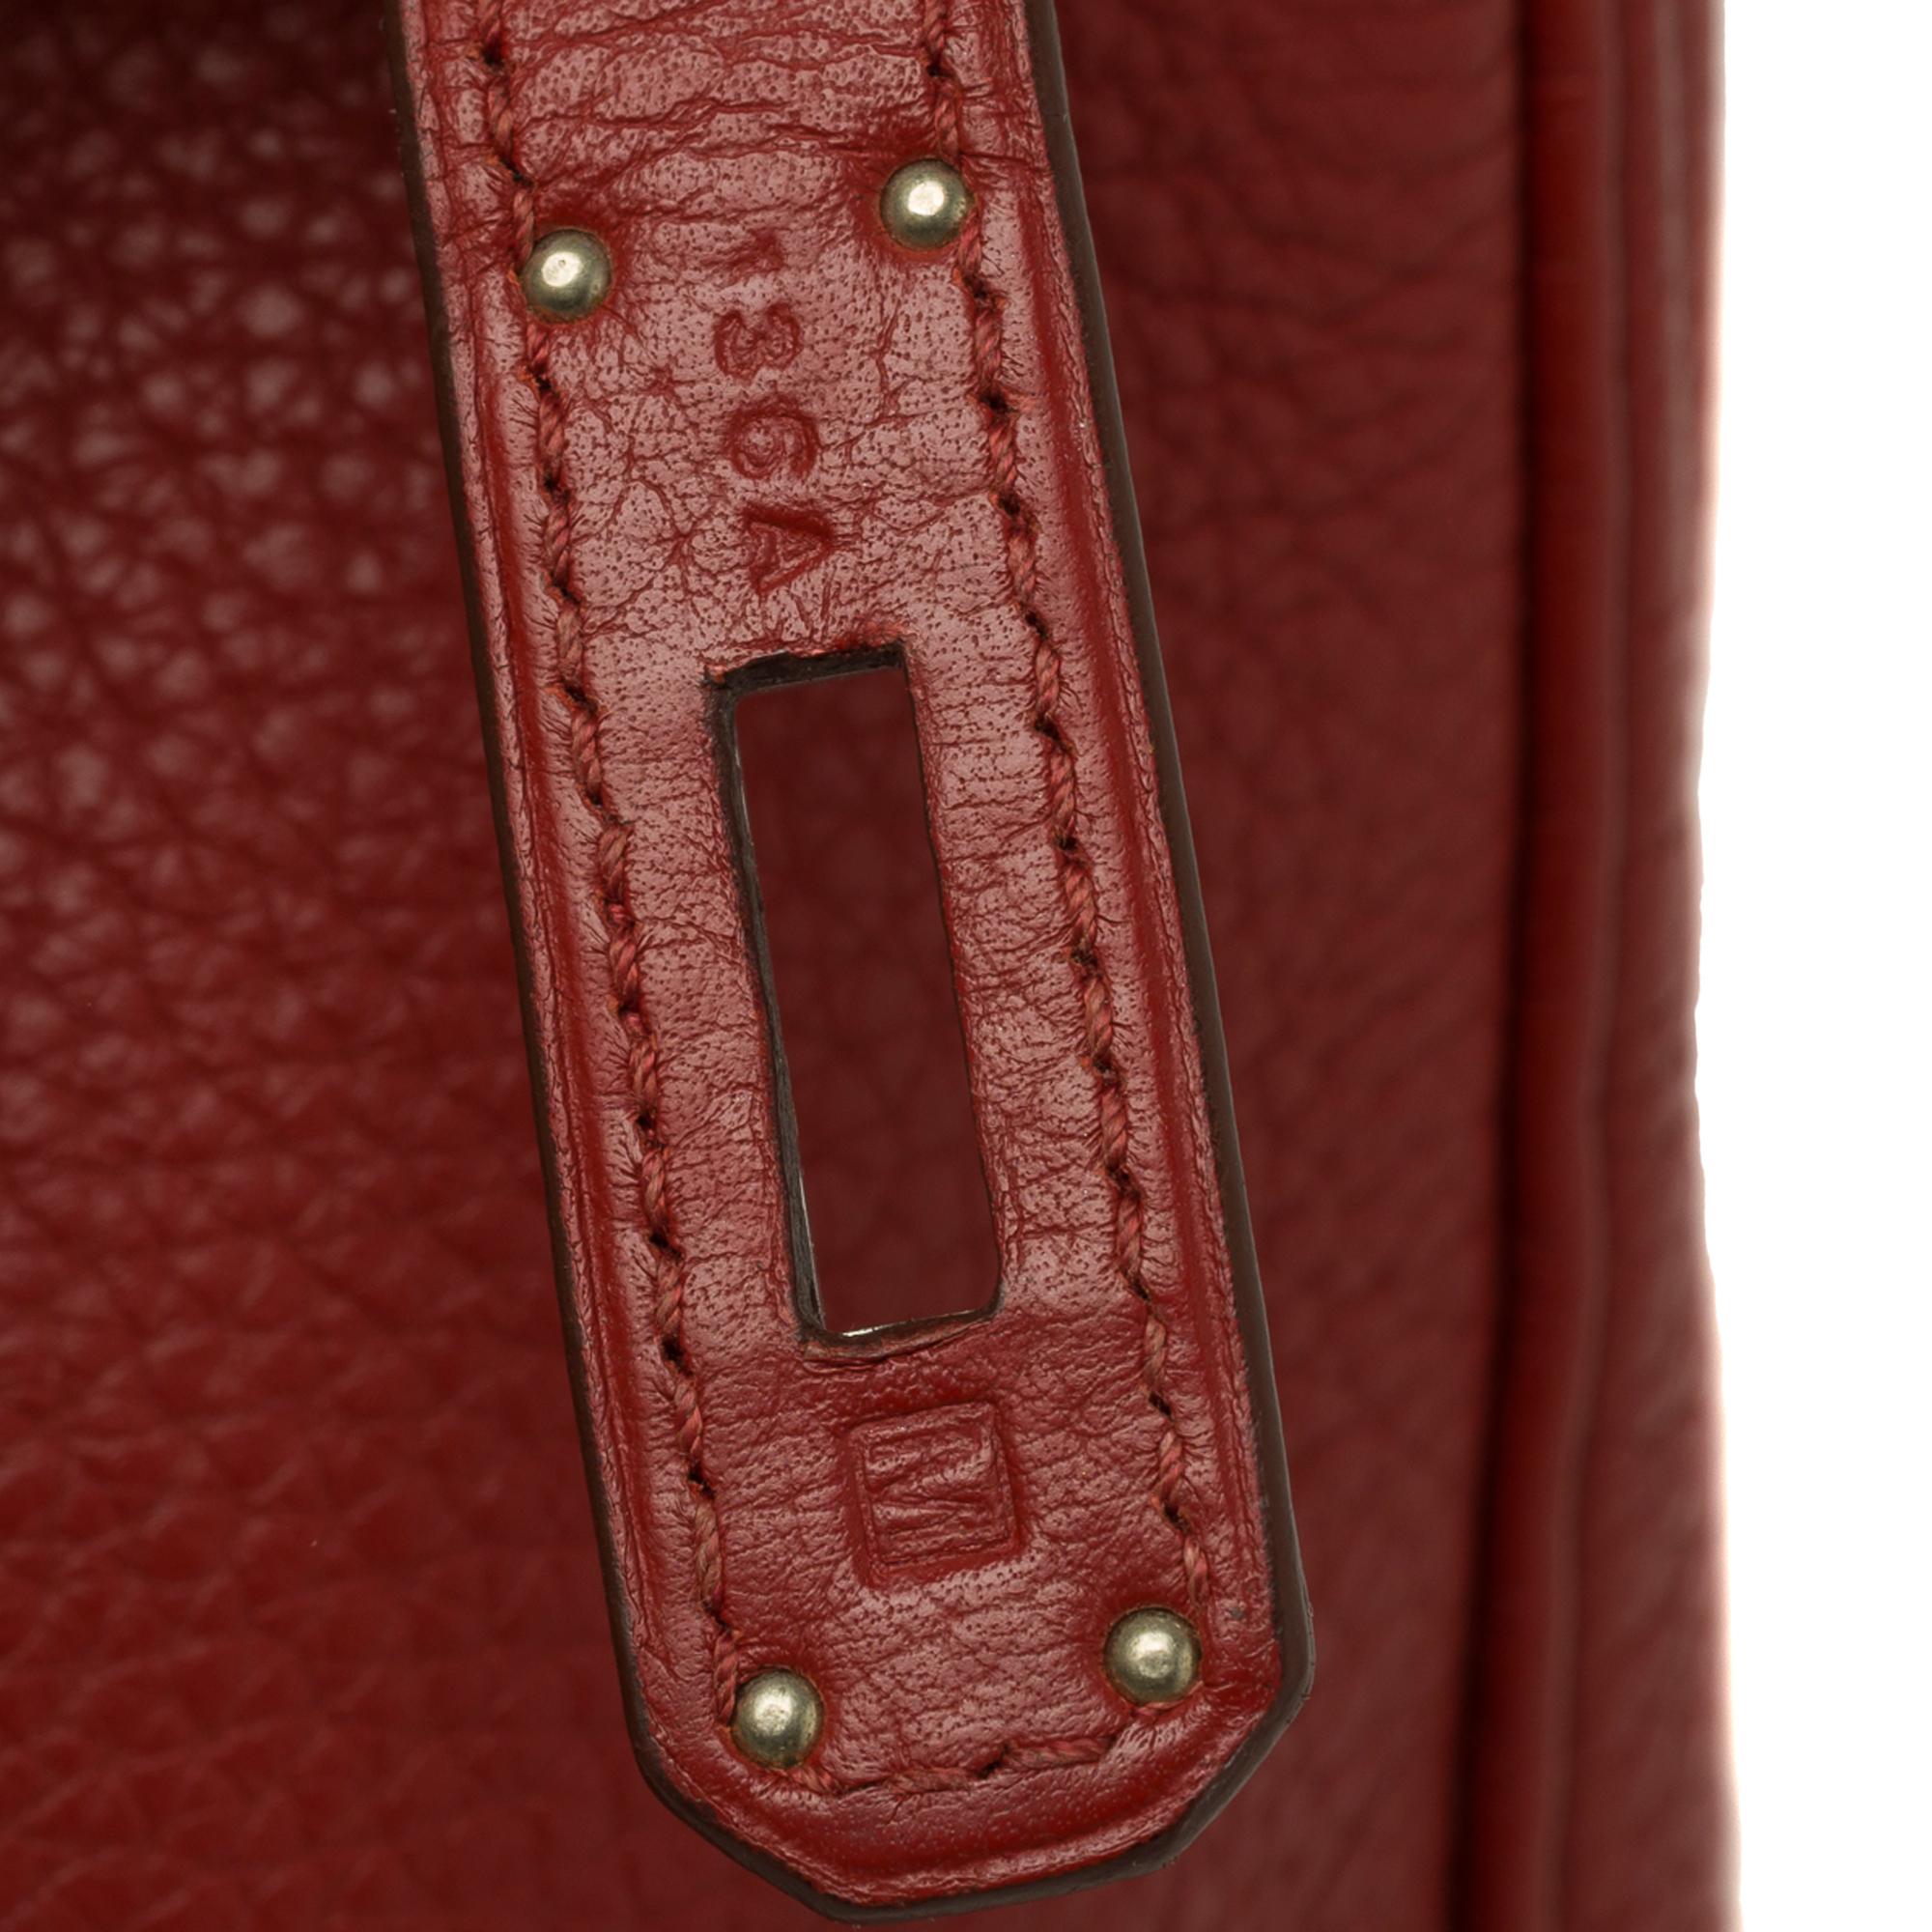 Stunning Hermès Birkin 35 handbag in Sienne Togo leather, SHW For Sale 5